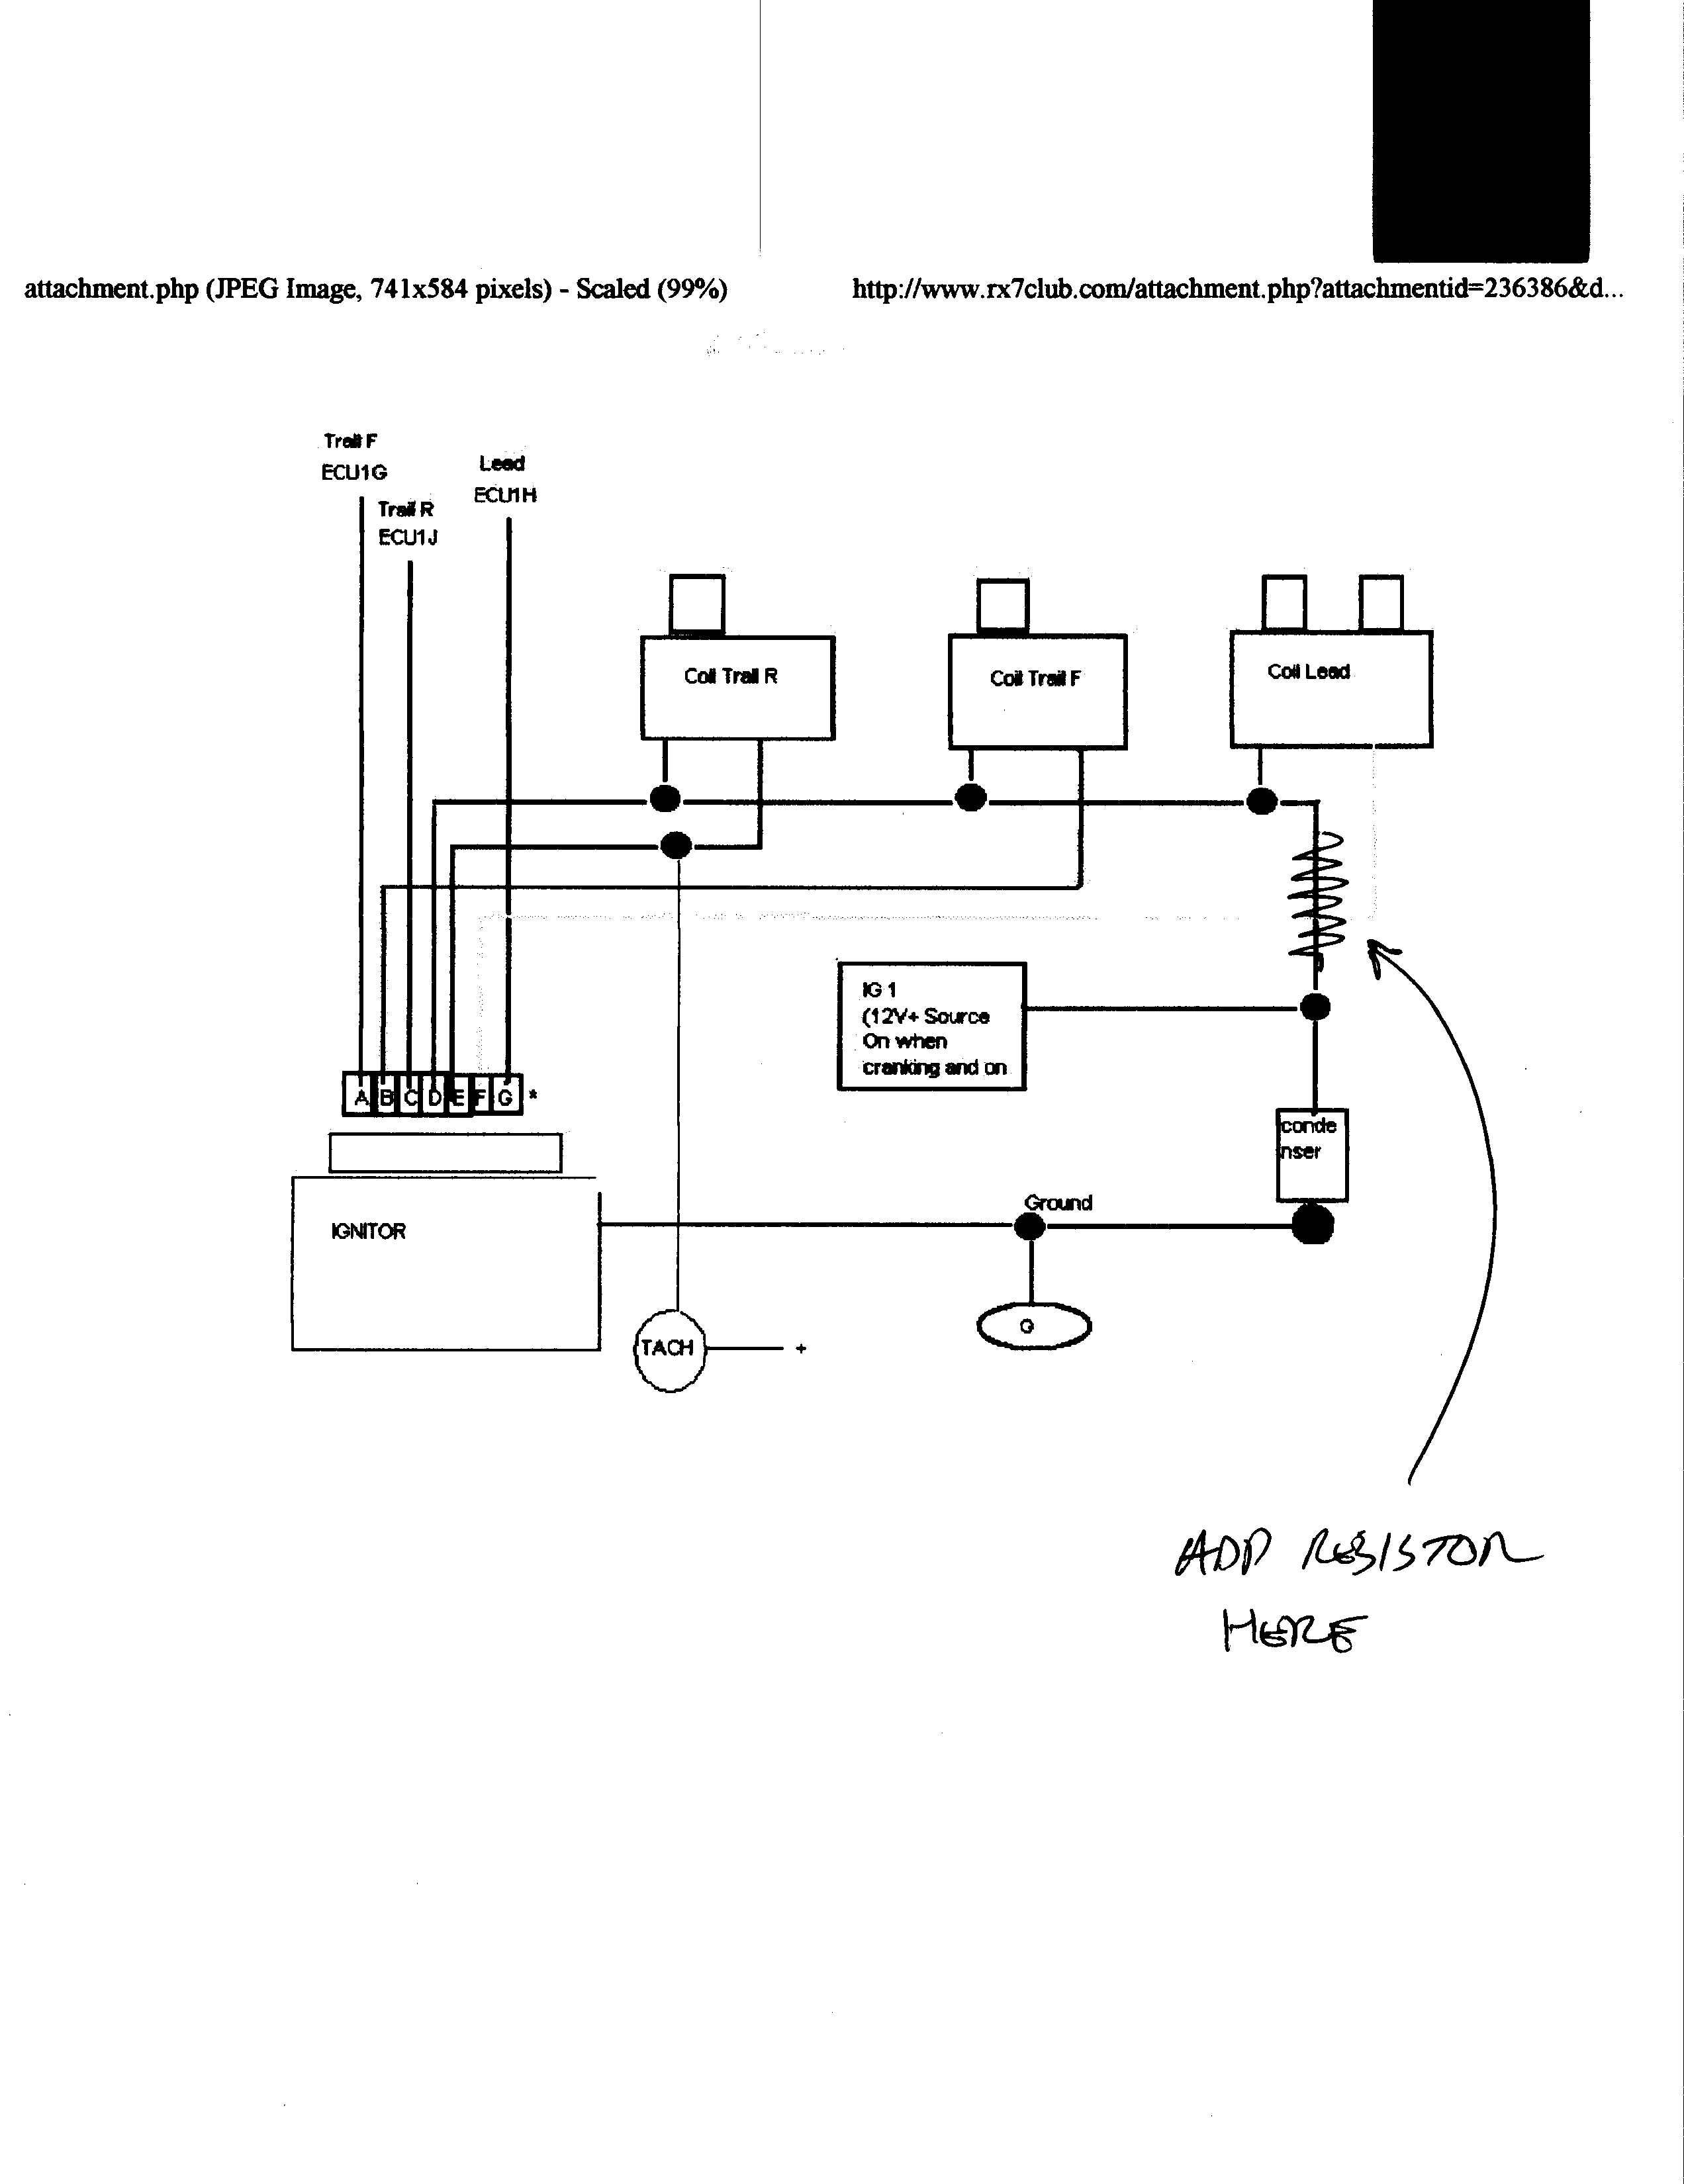 FD ignition, coil wiring help please - RX7Club.com - Mazda ...